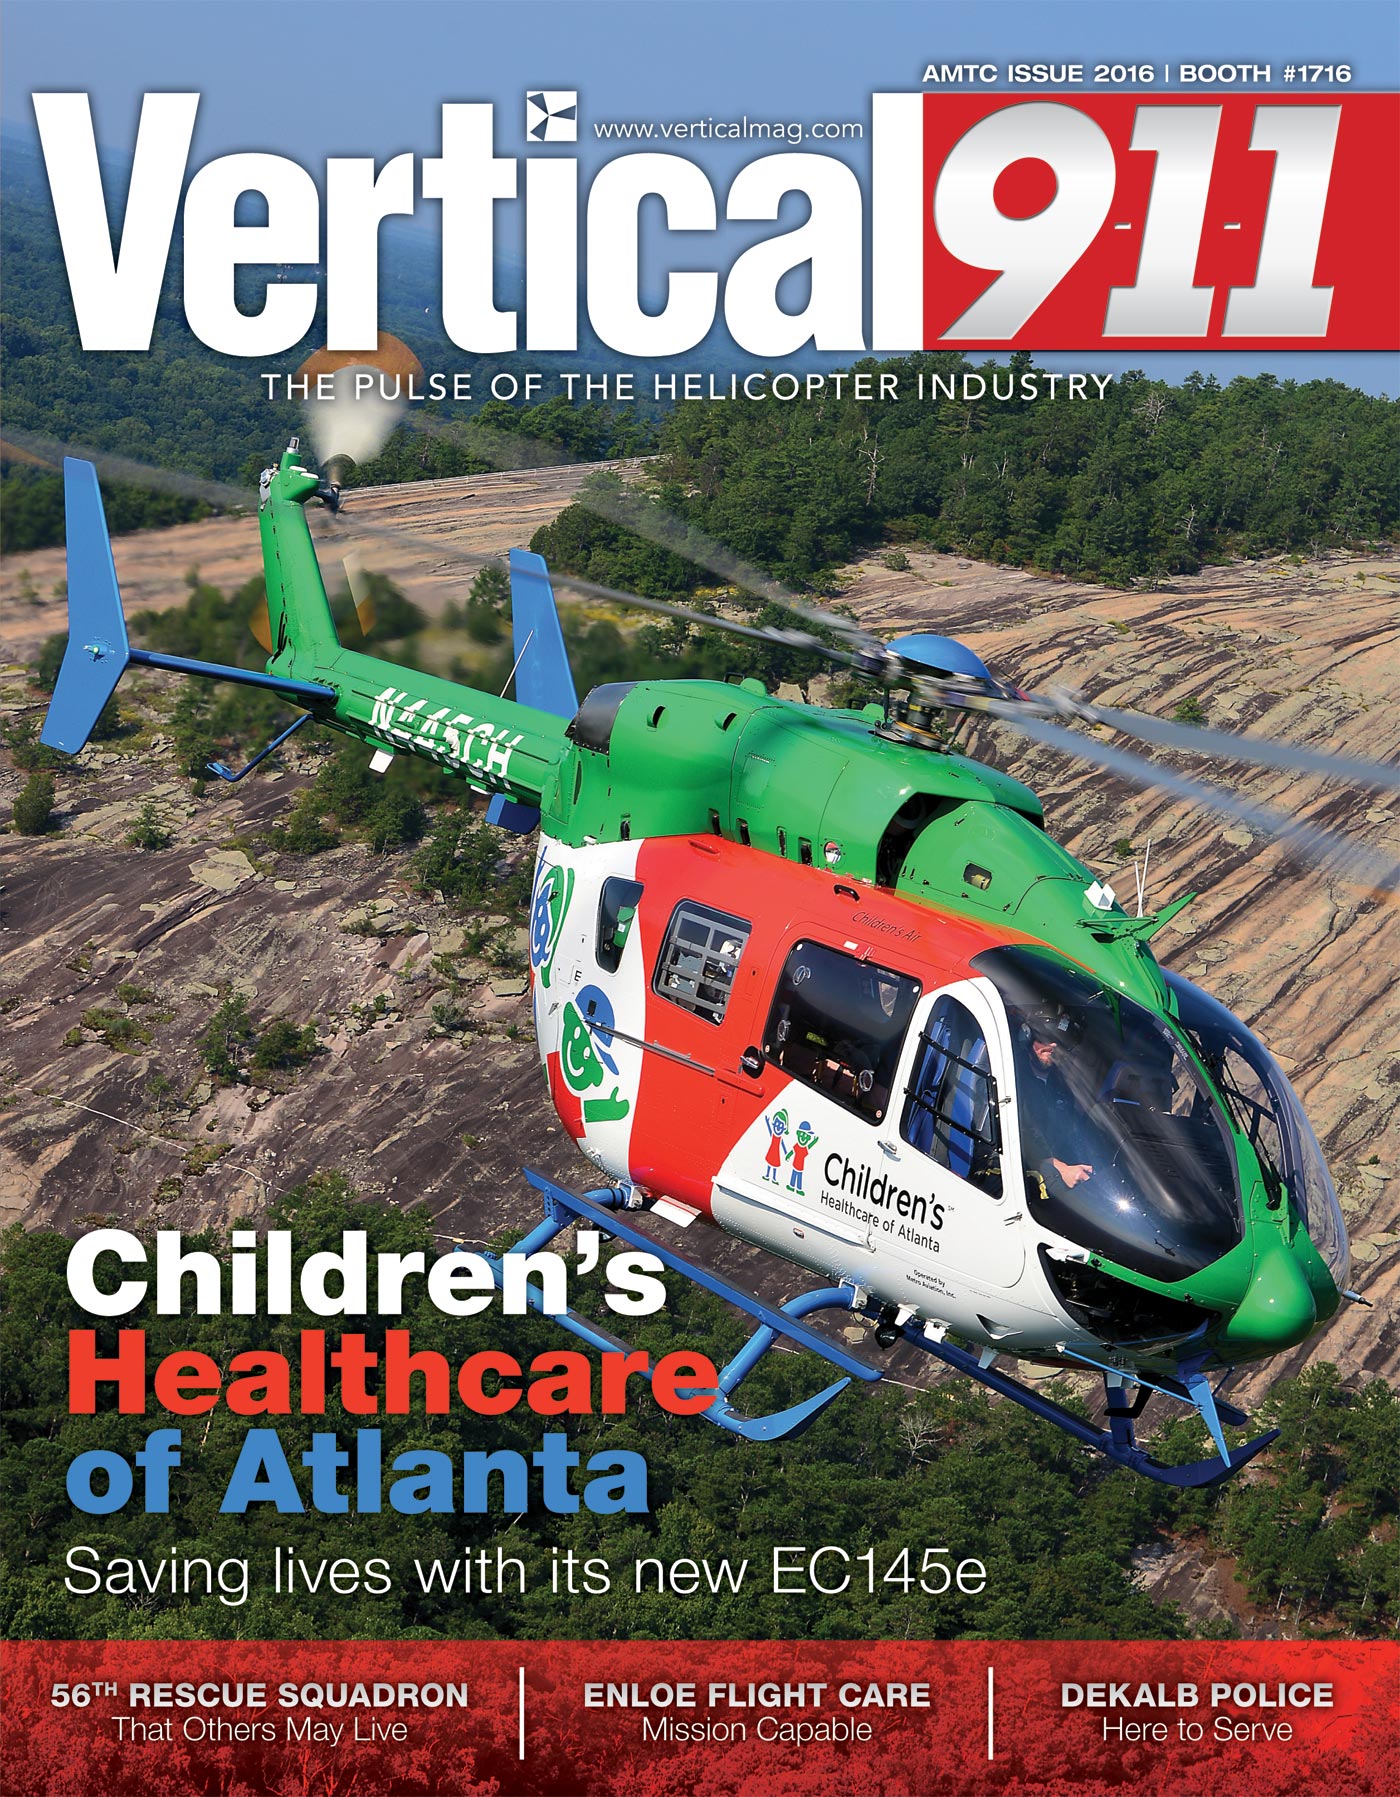 Vertical911 Fall 2016 - AMTC ISSUE